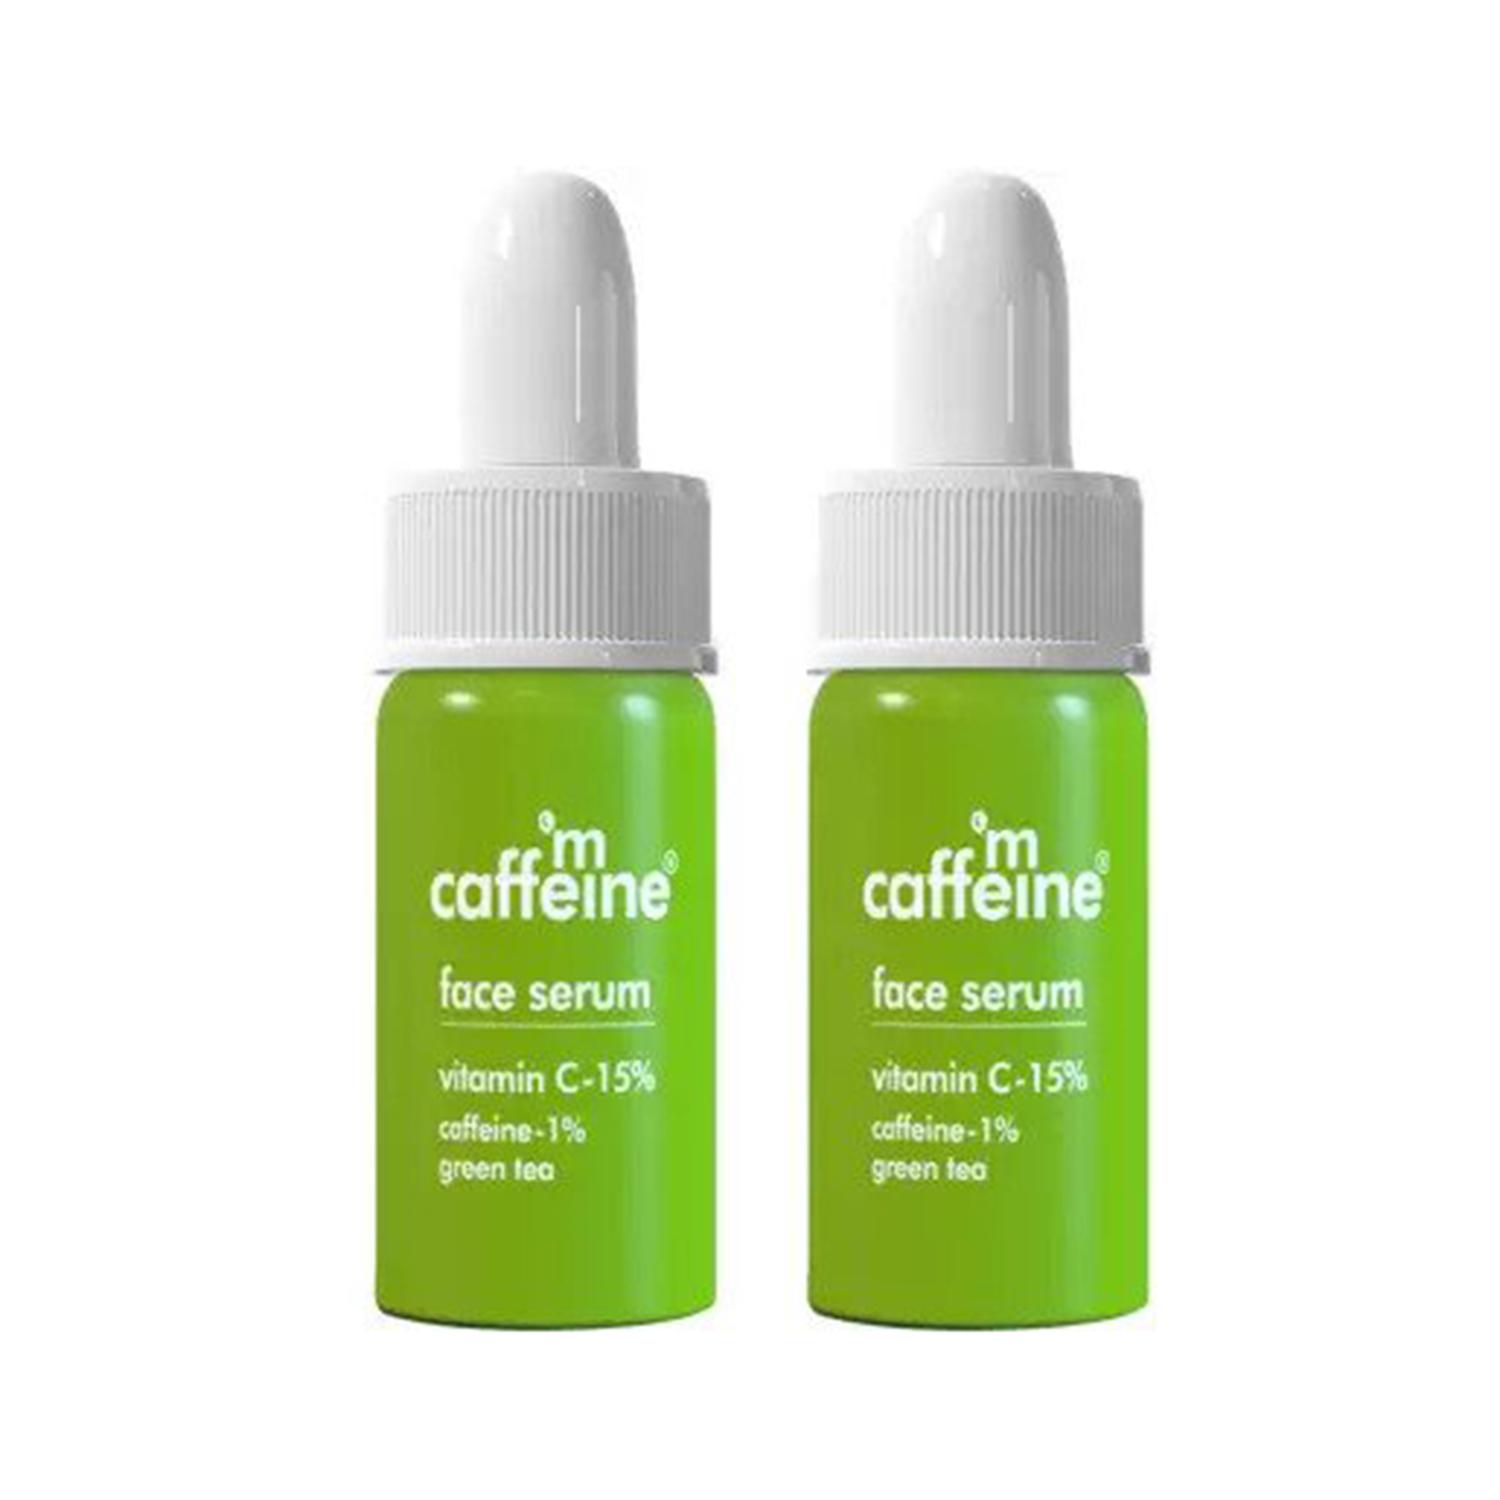 mCaffeine Green Tea 15% Vitamin C Face Serum for Glowing Skin Combo